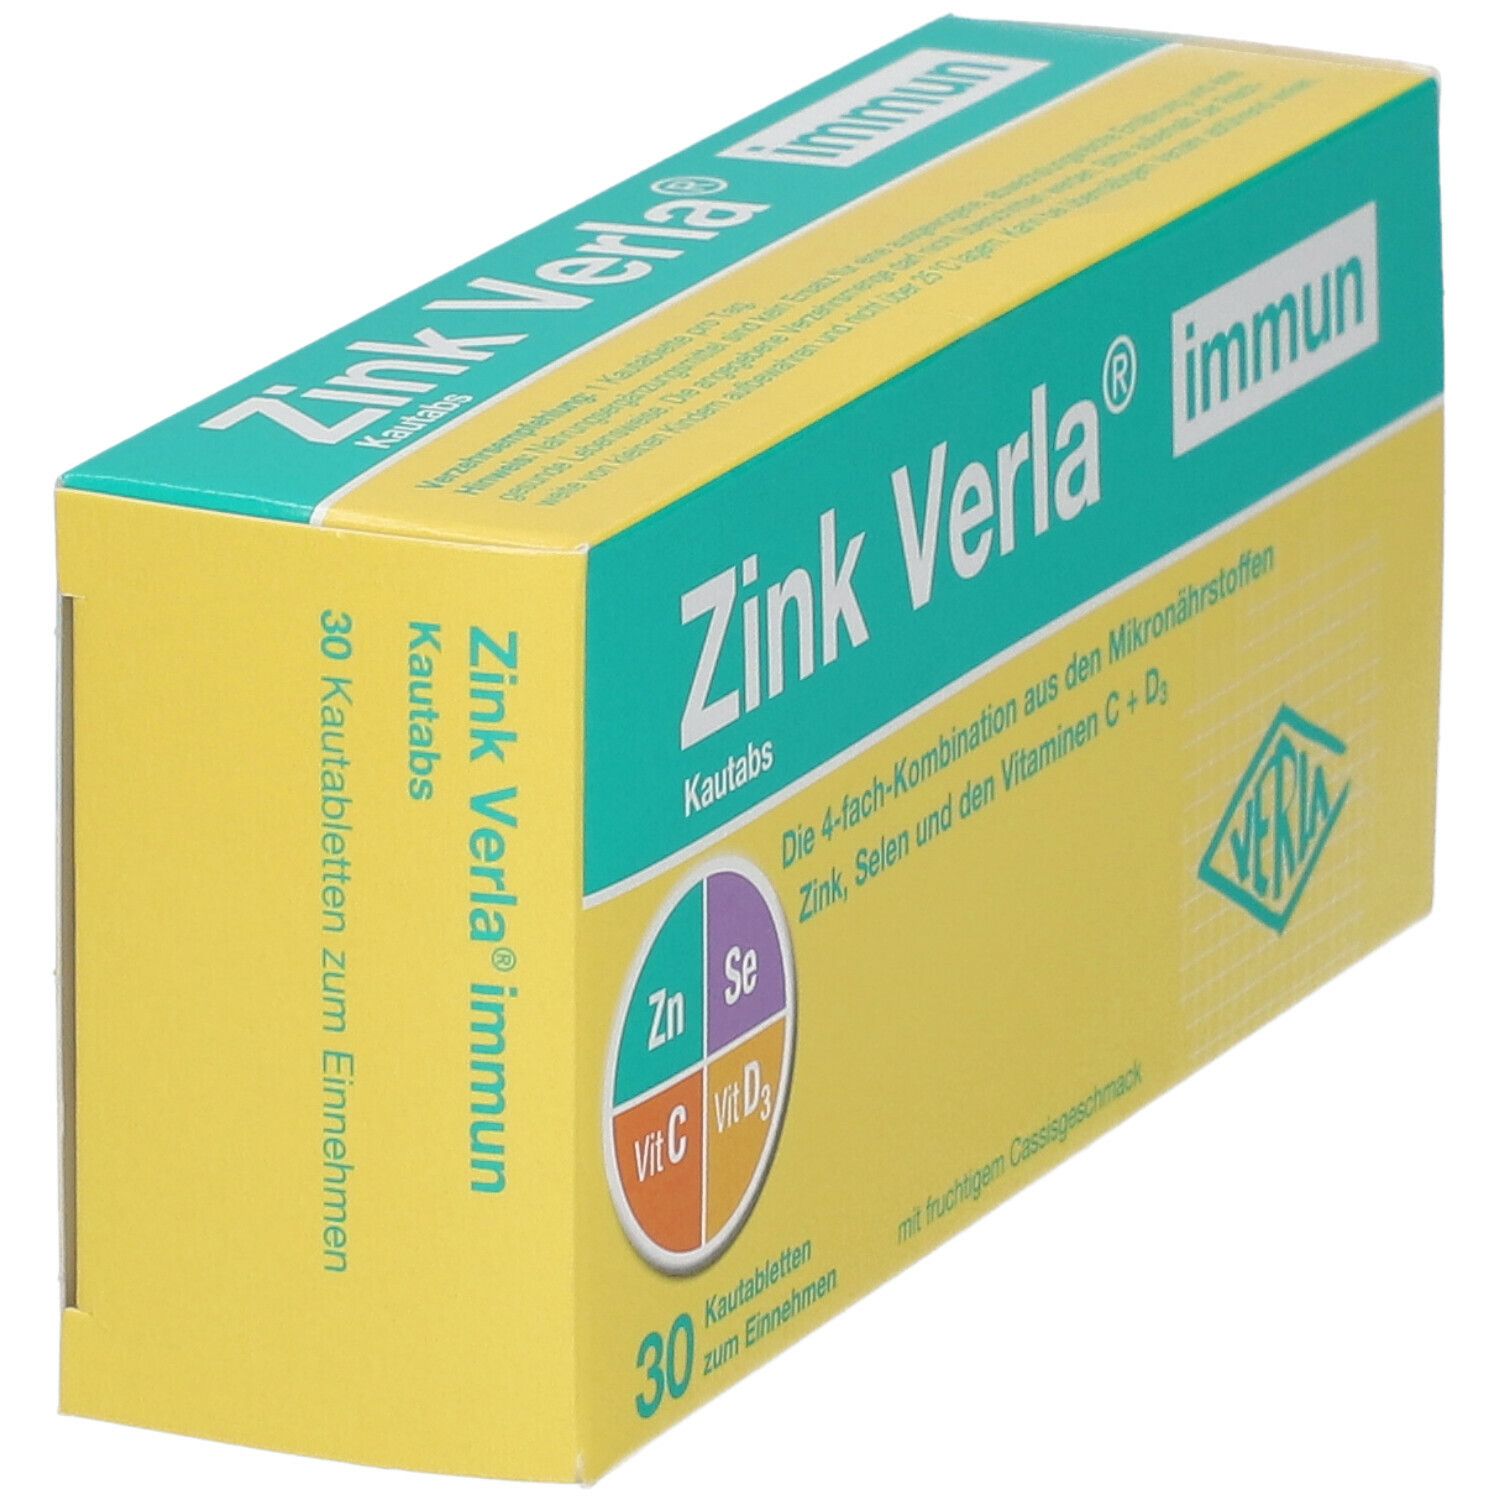 Zink Verla® immun